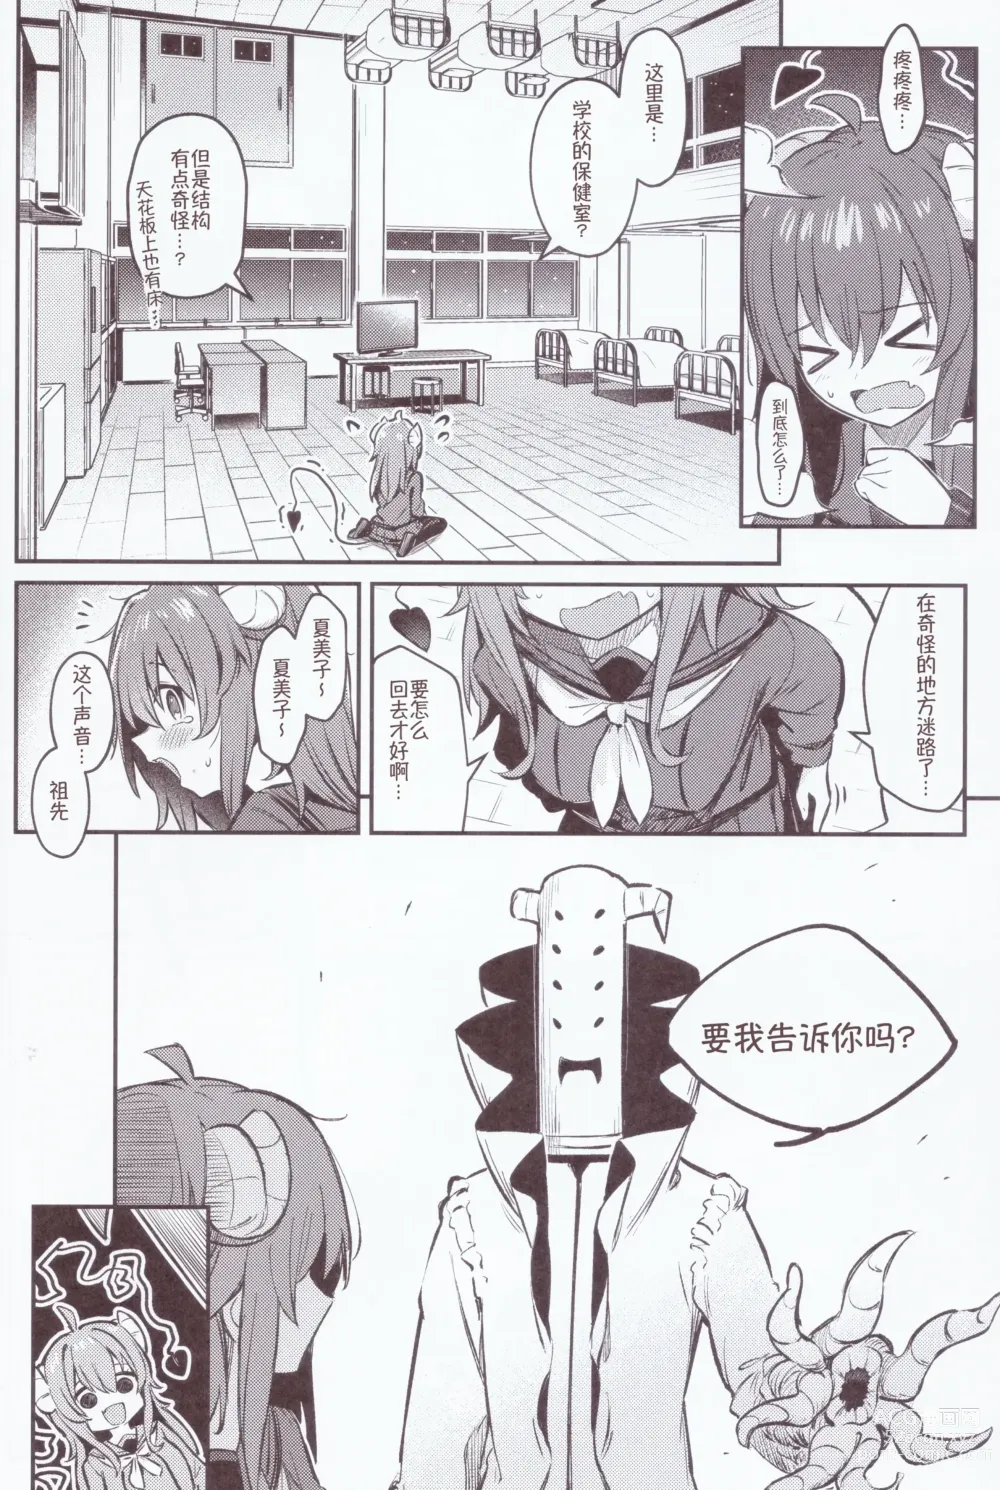 Page 7 of doujinshi 魔族与宿敌被关在不搞好关系就出不来的房间里!